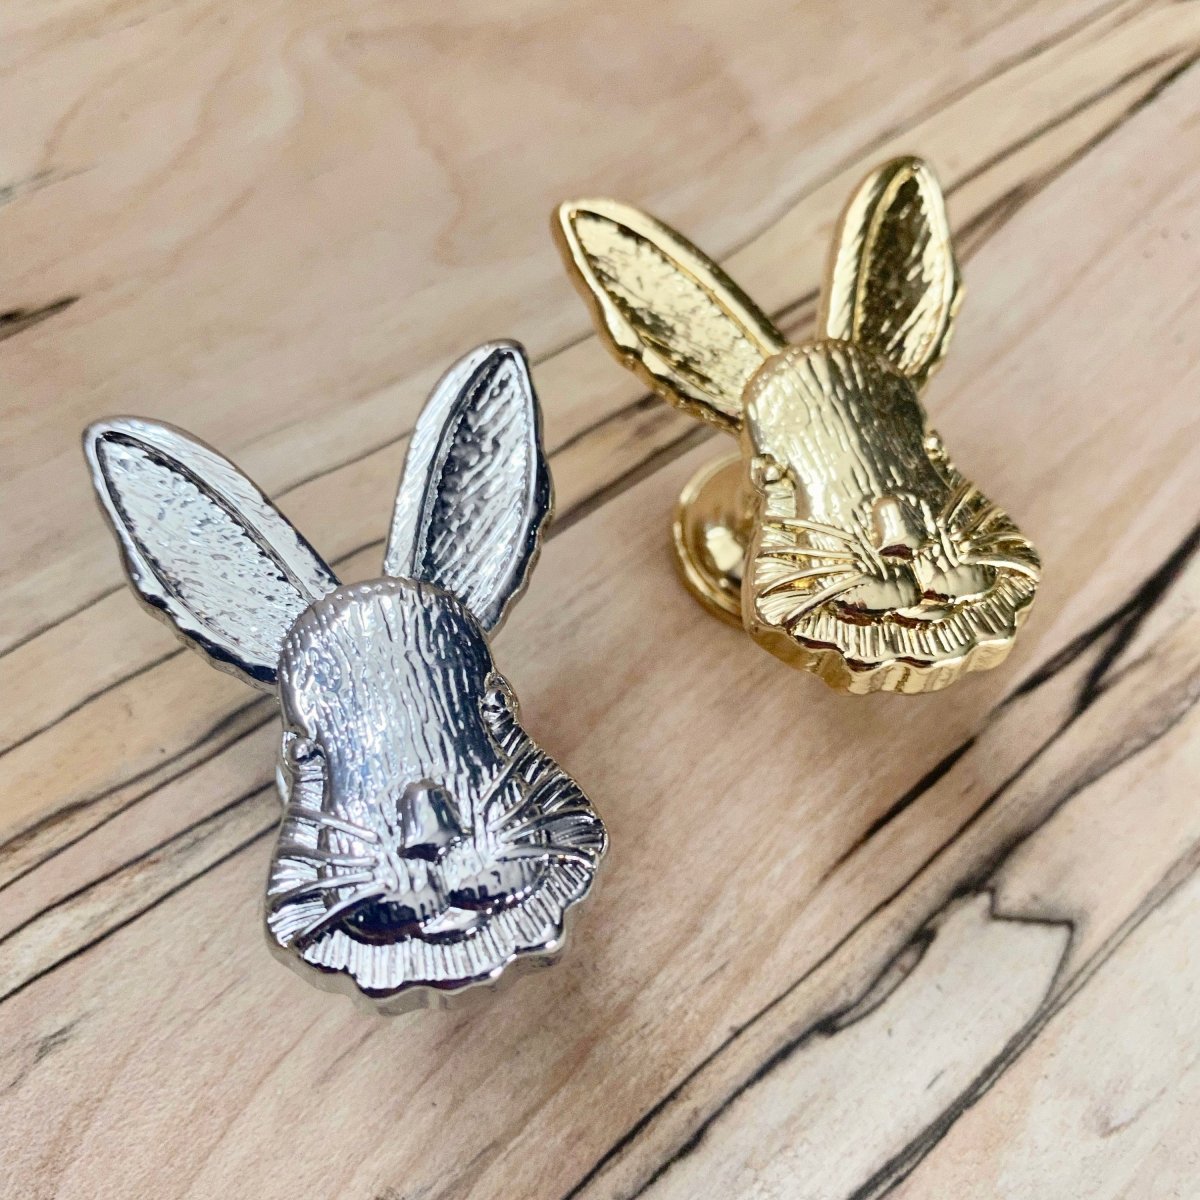 Rabbit Knob Gold or Silver - DaRosa Creations